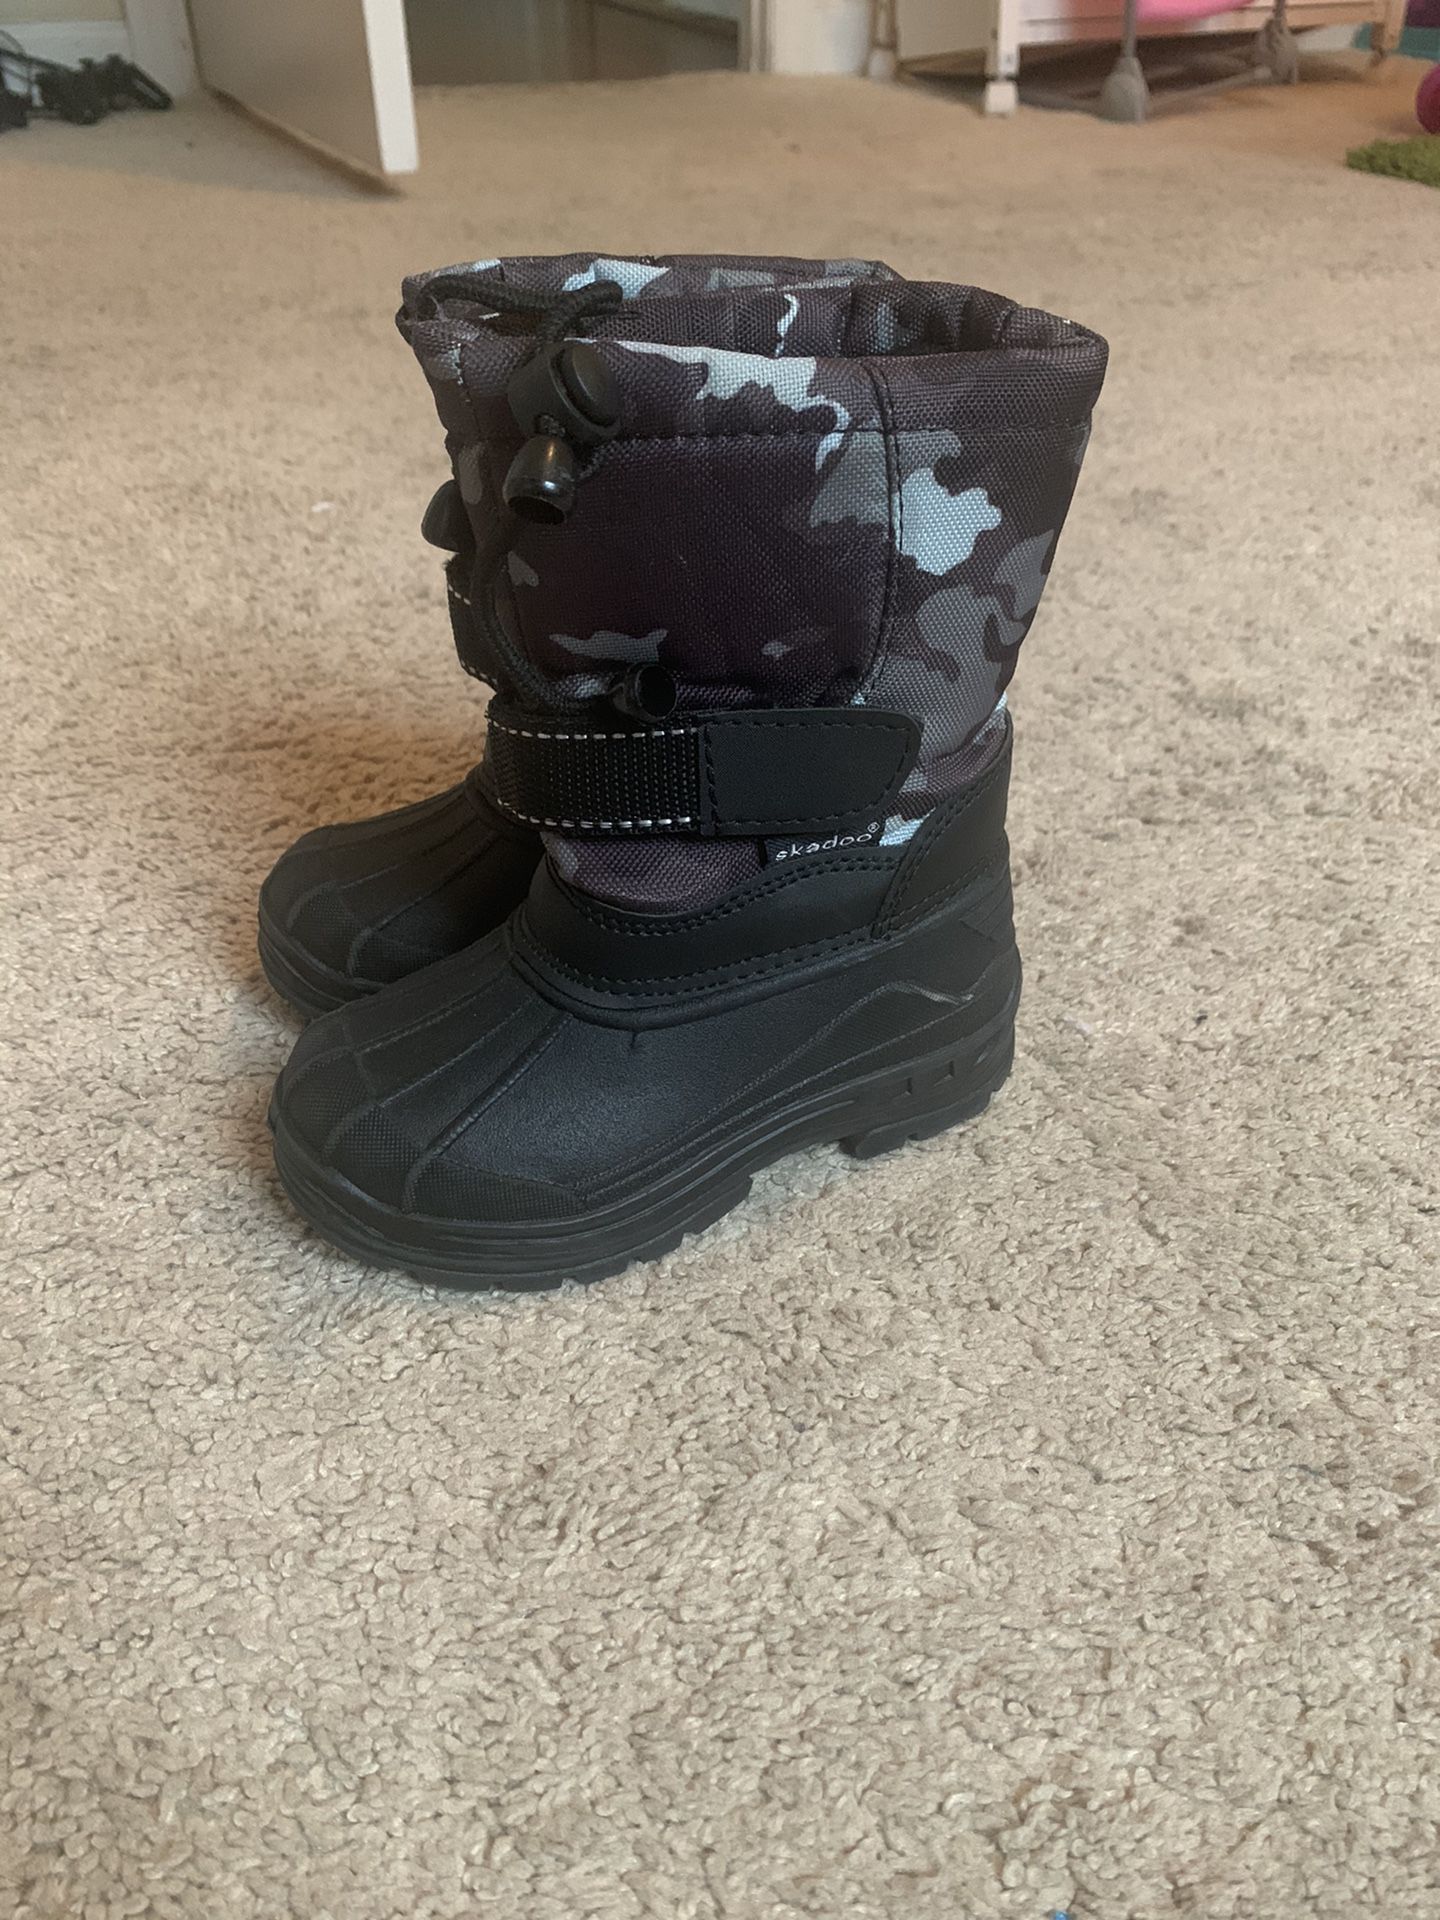 Snow boots size 6c